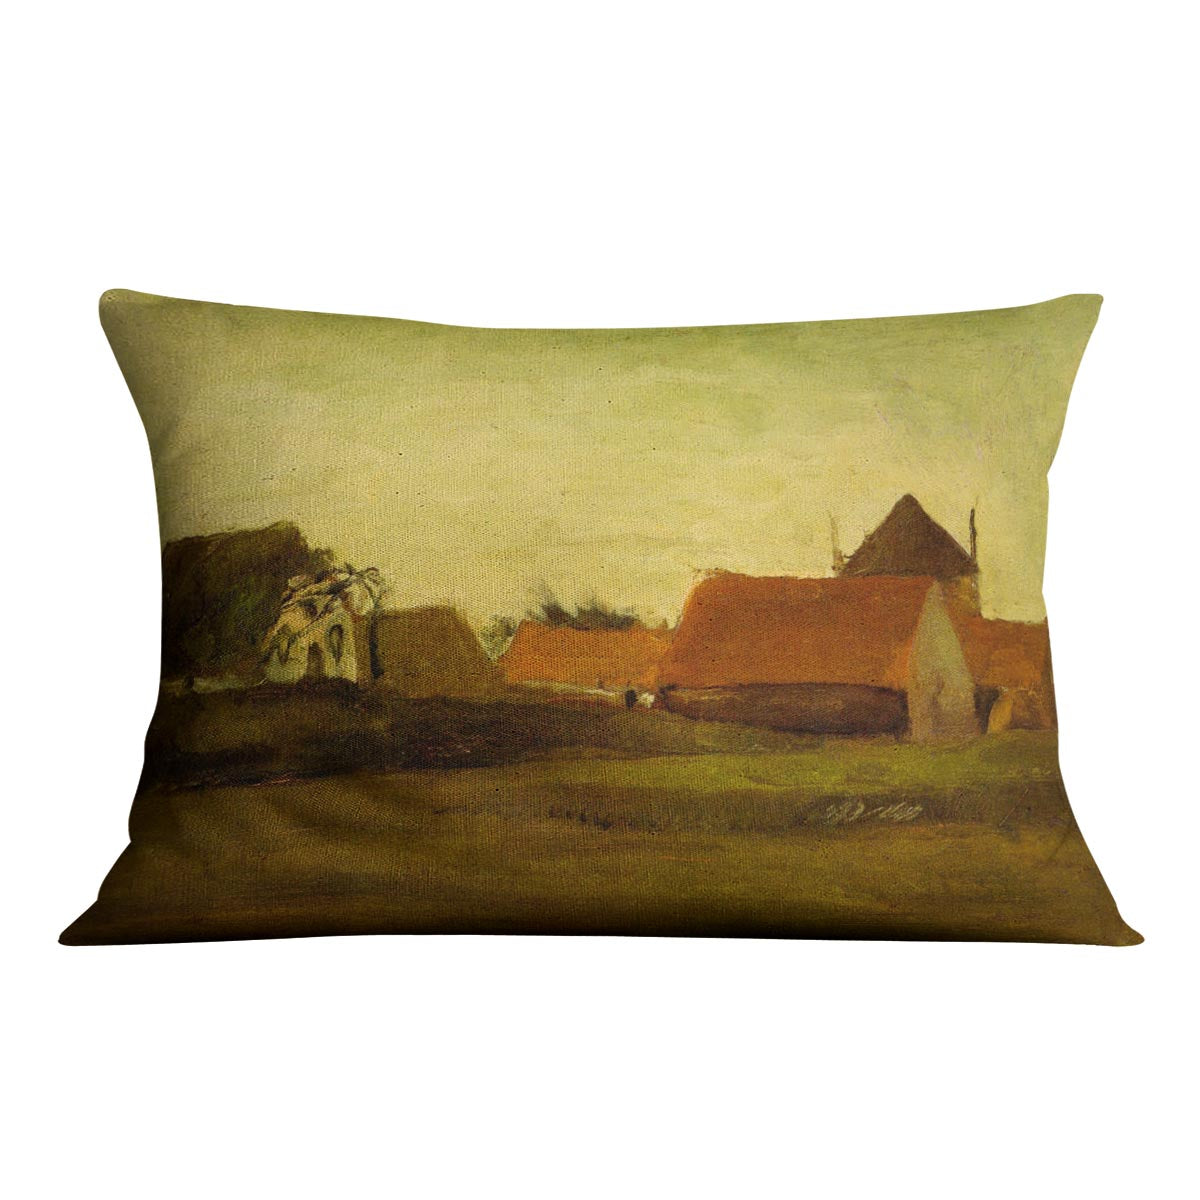 Farmhouses in Loosduinen near The Hague at Twilight by Van Gogh Cushion